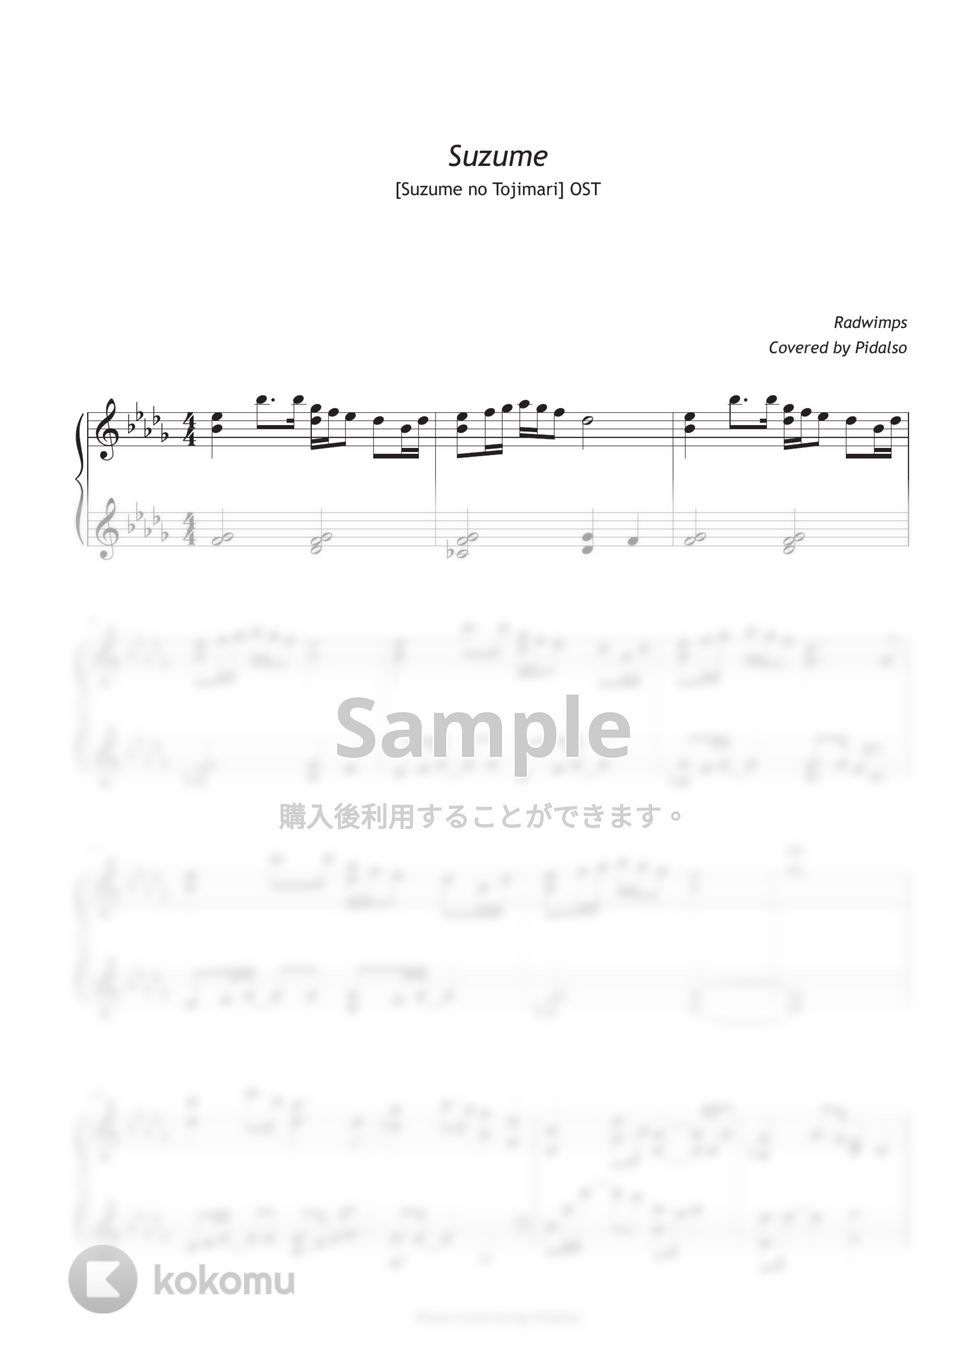 Radwimps - Suzume (すずめ) (すずめの戸締まり) by Pidalso